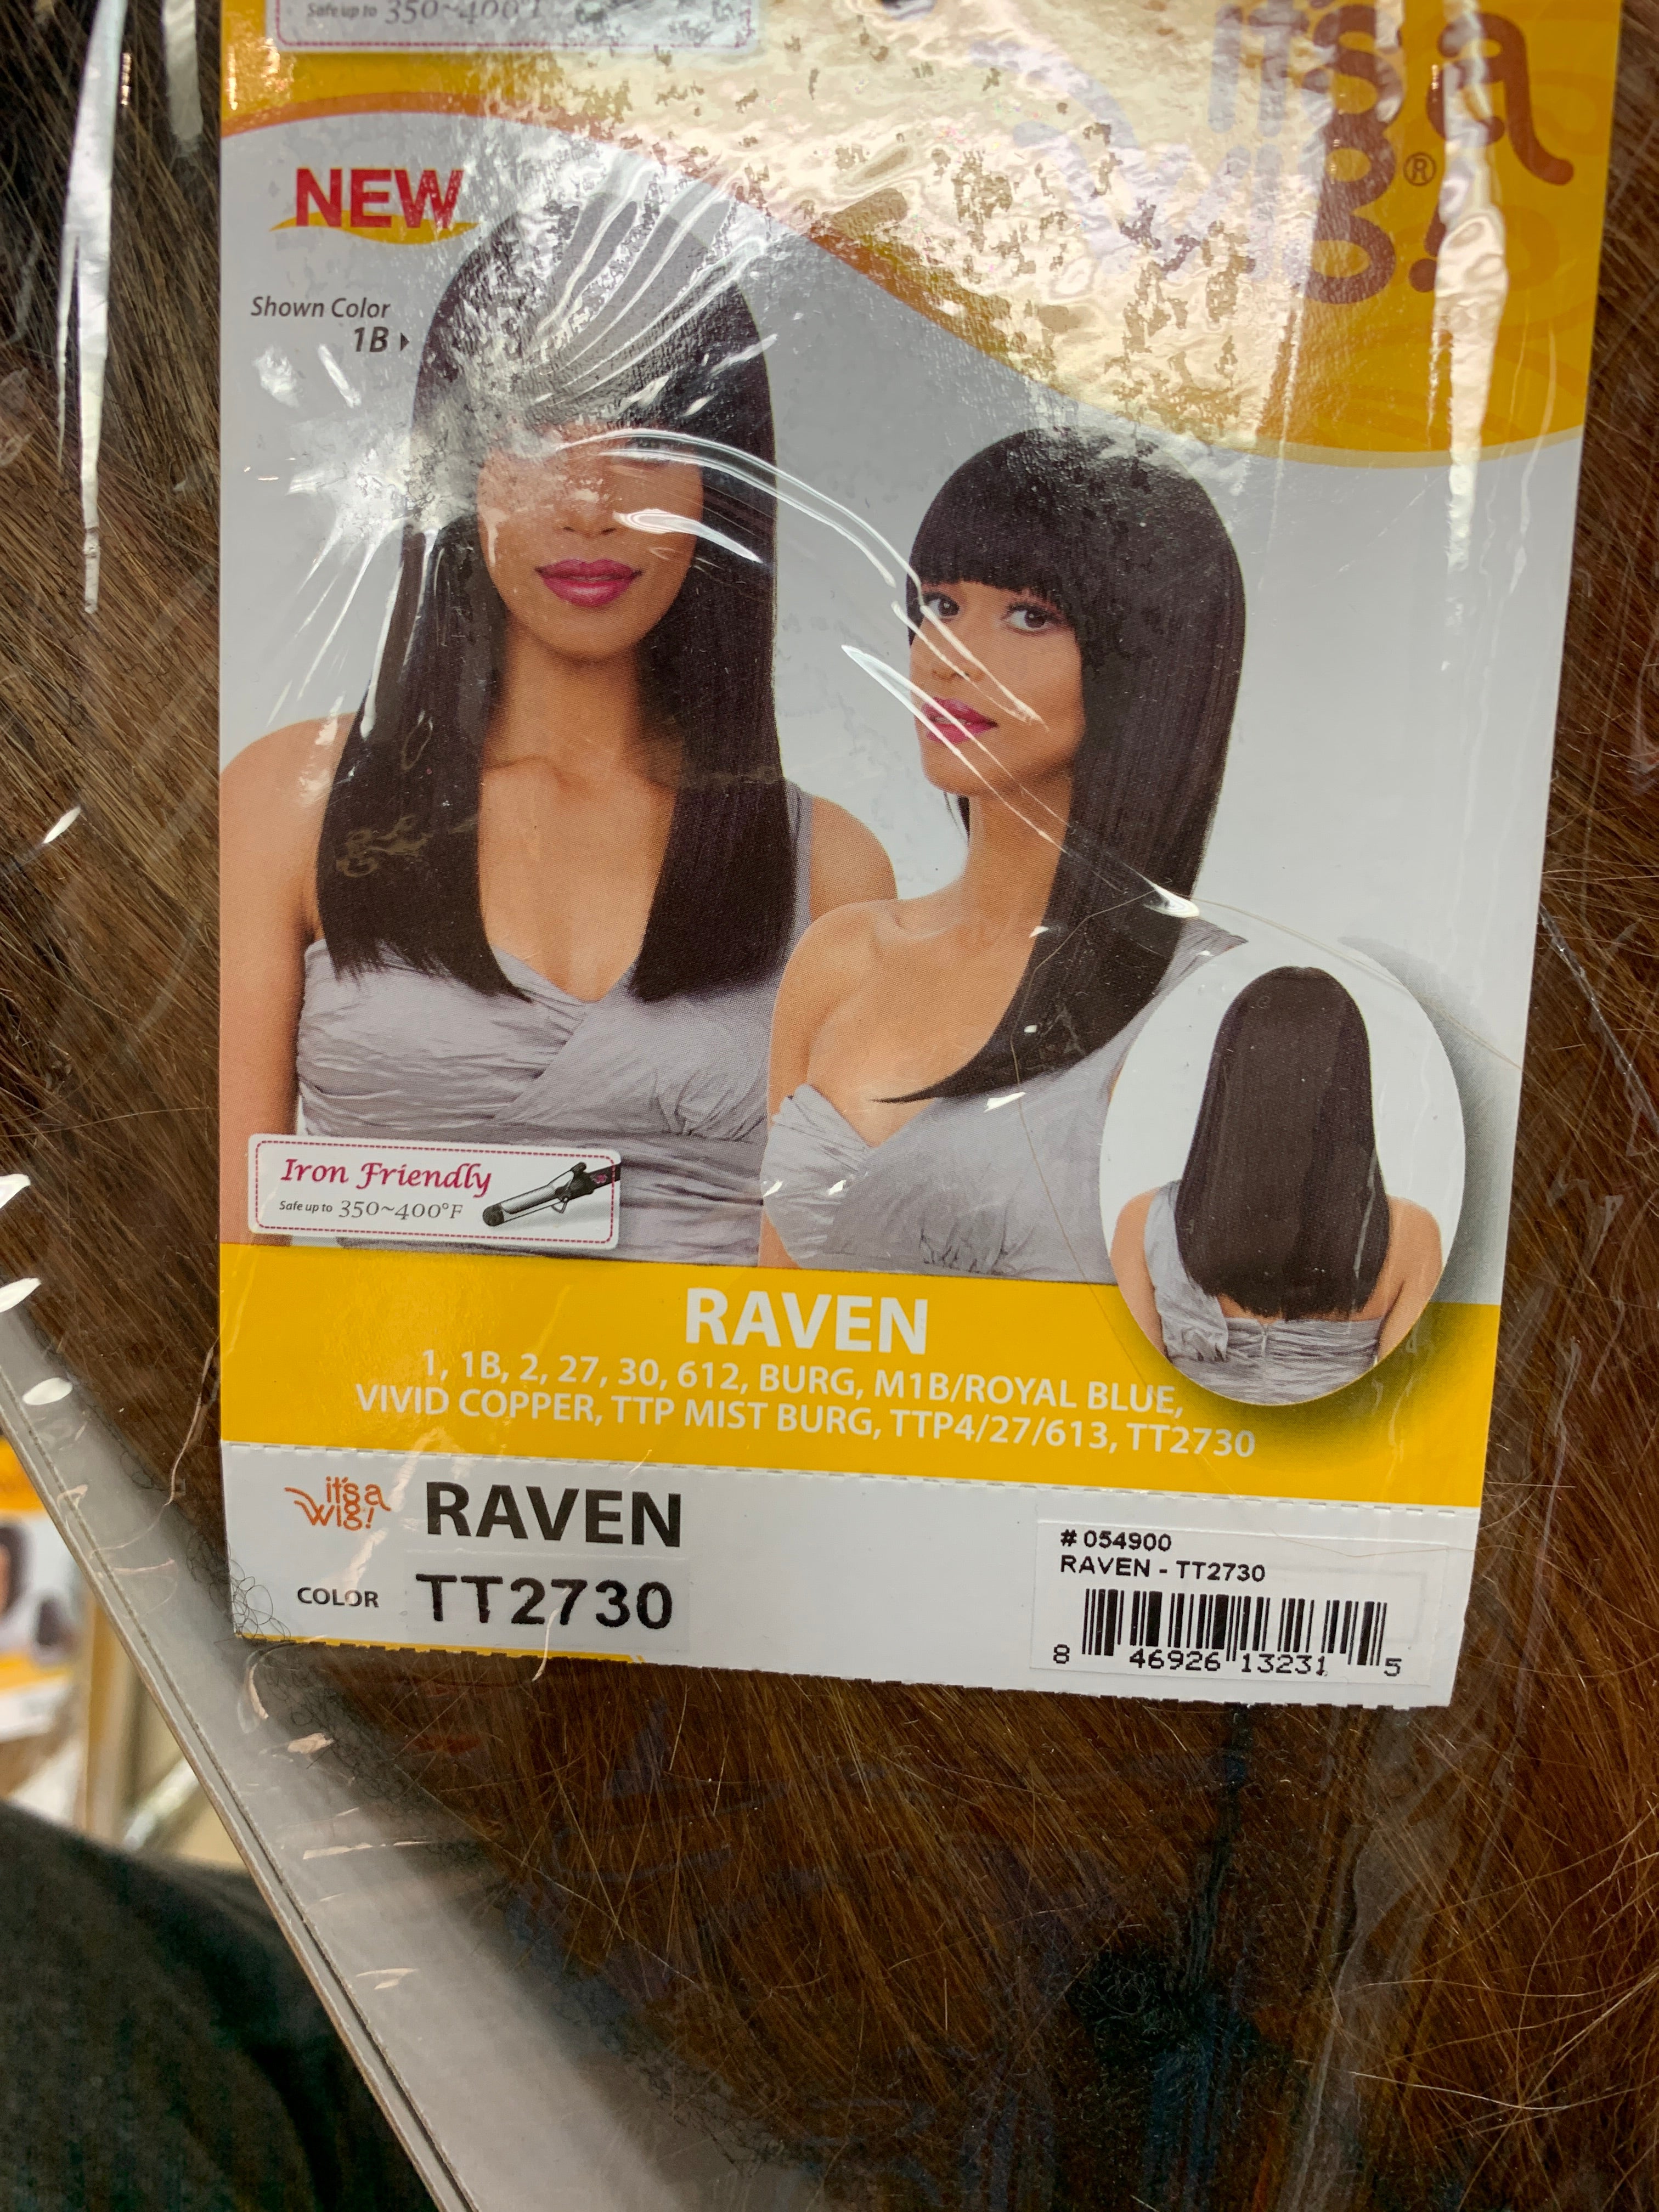 It’s a wig Raven